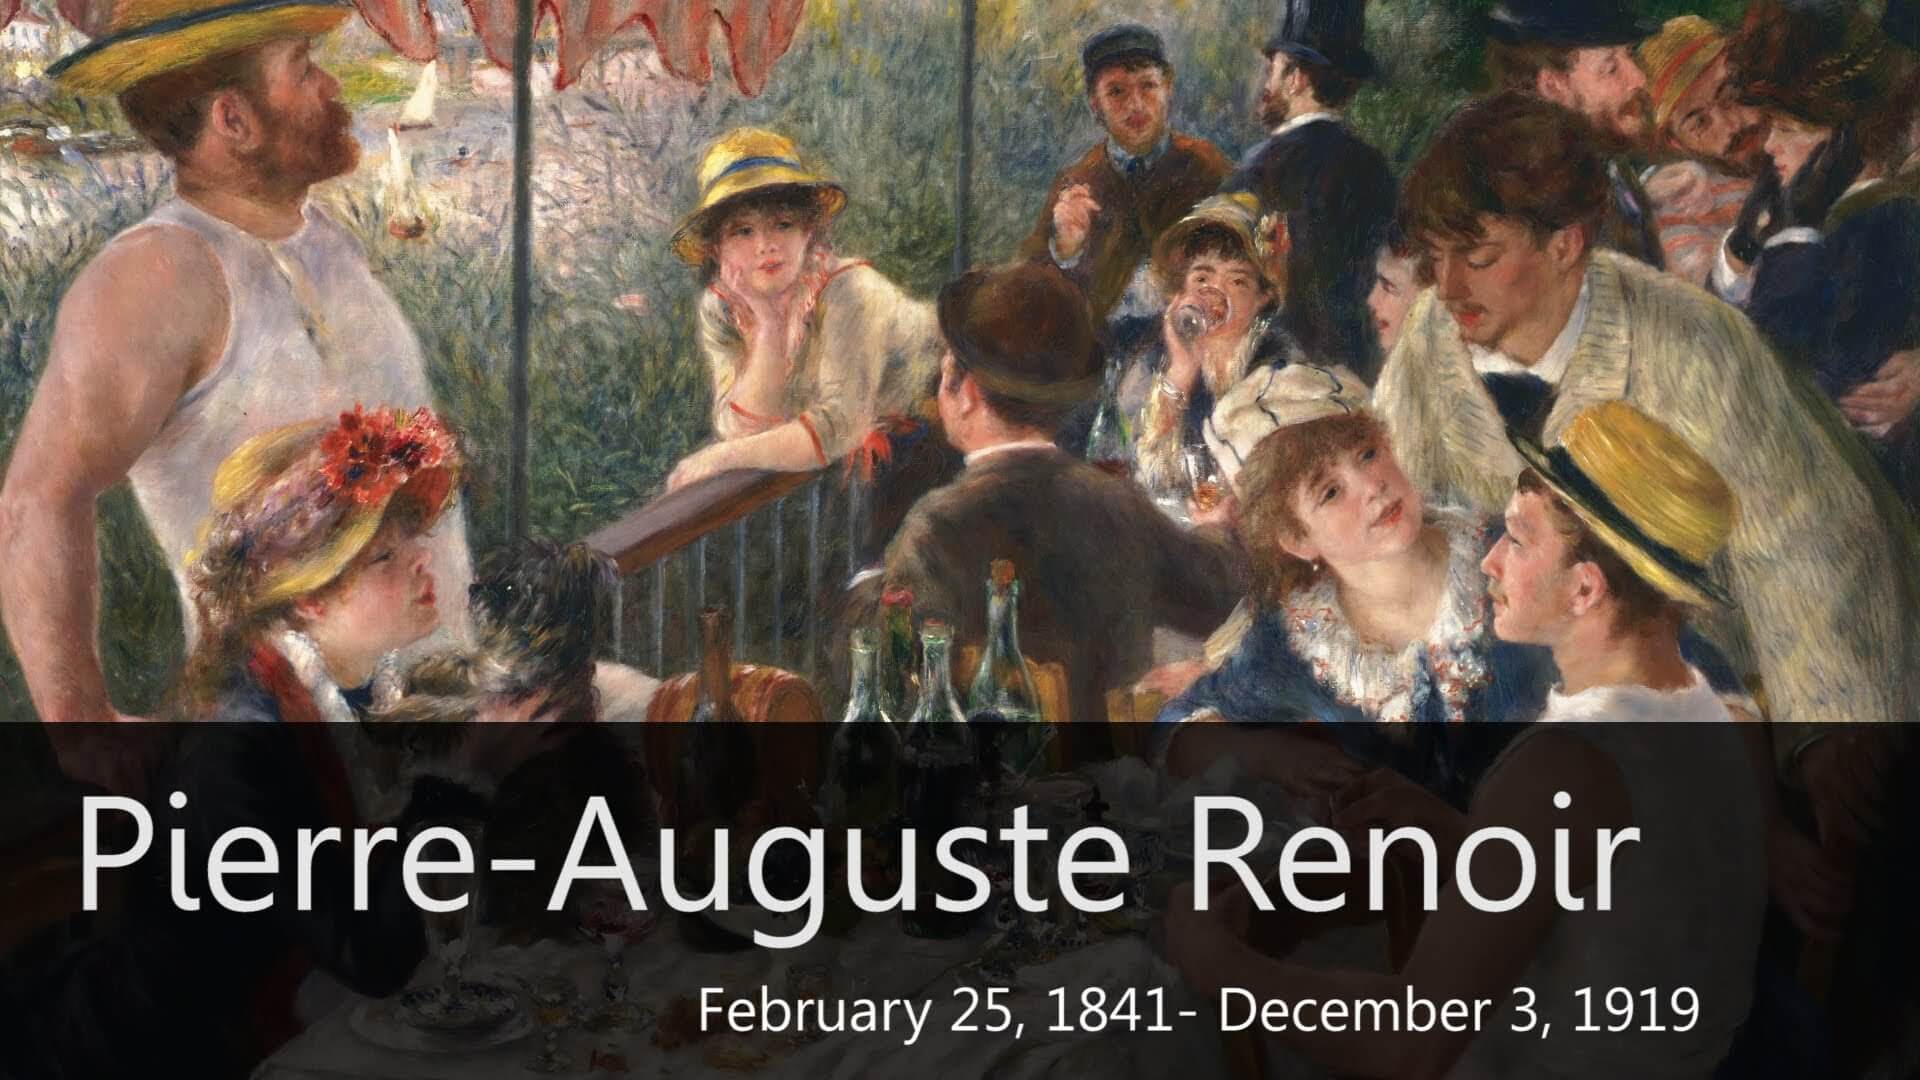 Pierre-Auguste Renoir Biography » Video » Surfnetkids